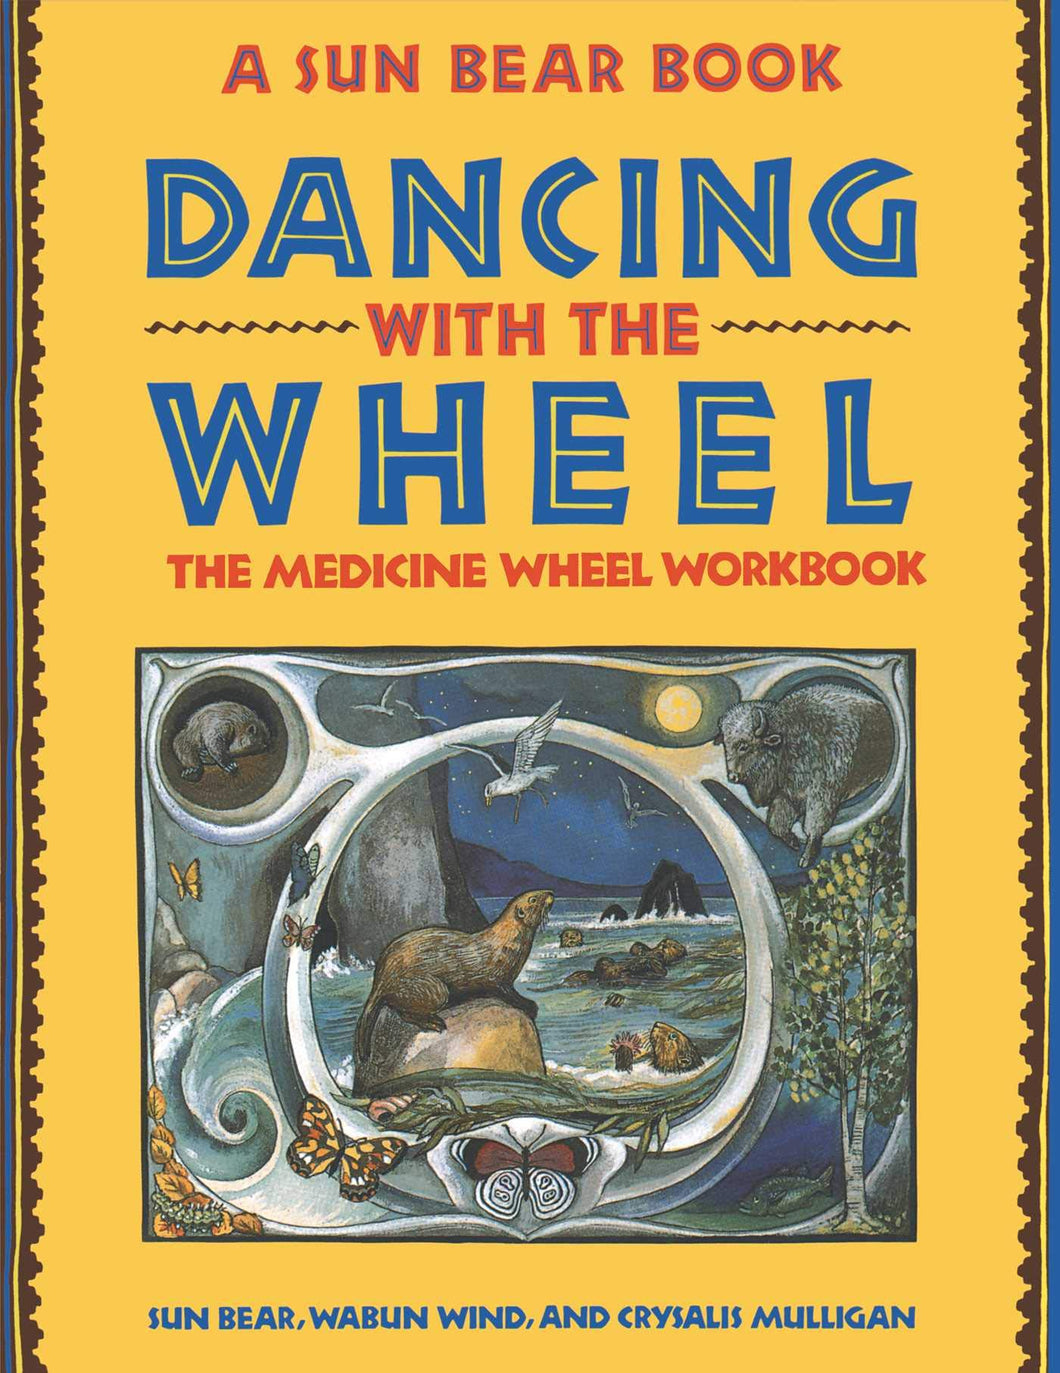 Dancing with the Wheel [Sun Bear, Wabun Wind & Crysalis Mulligan]